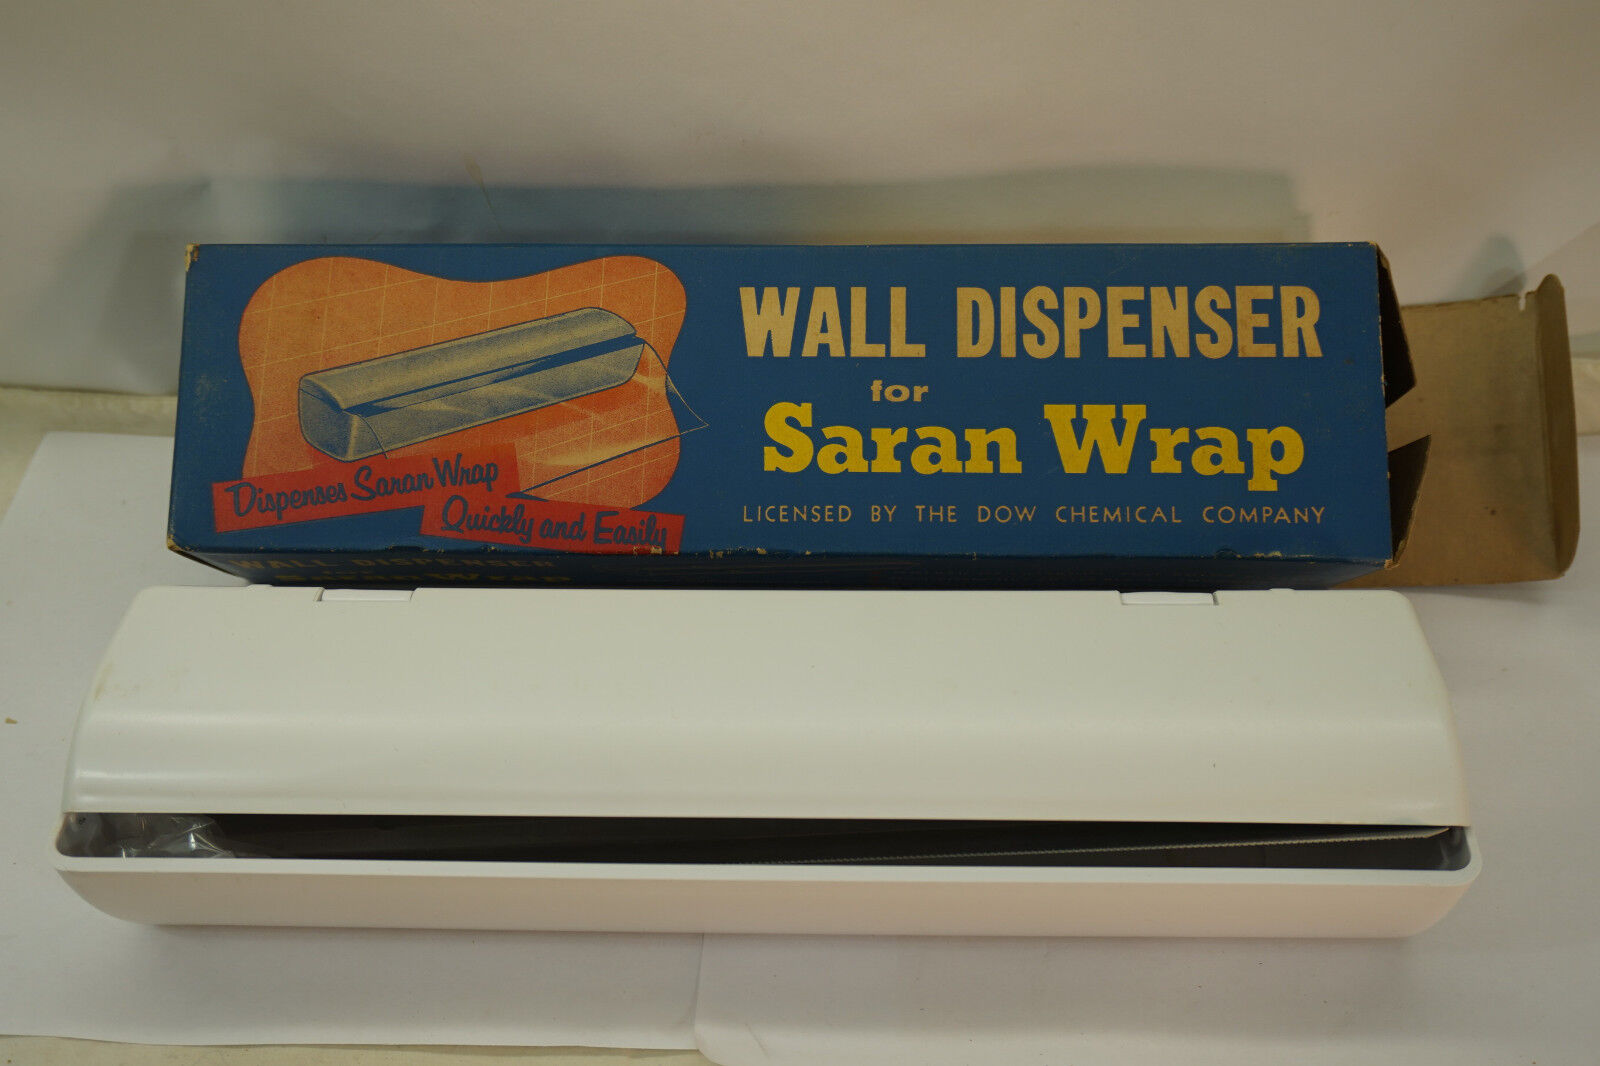 VINTAGE KITCHEN WALL DISPENSER FOR SARAN WRAP UNUSED ORIGINAL BOX 1950s HOLDER